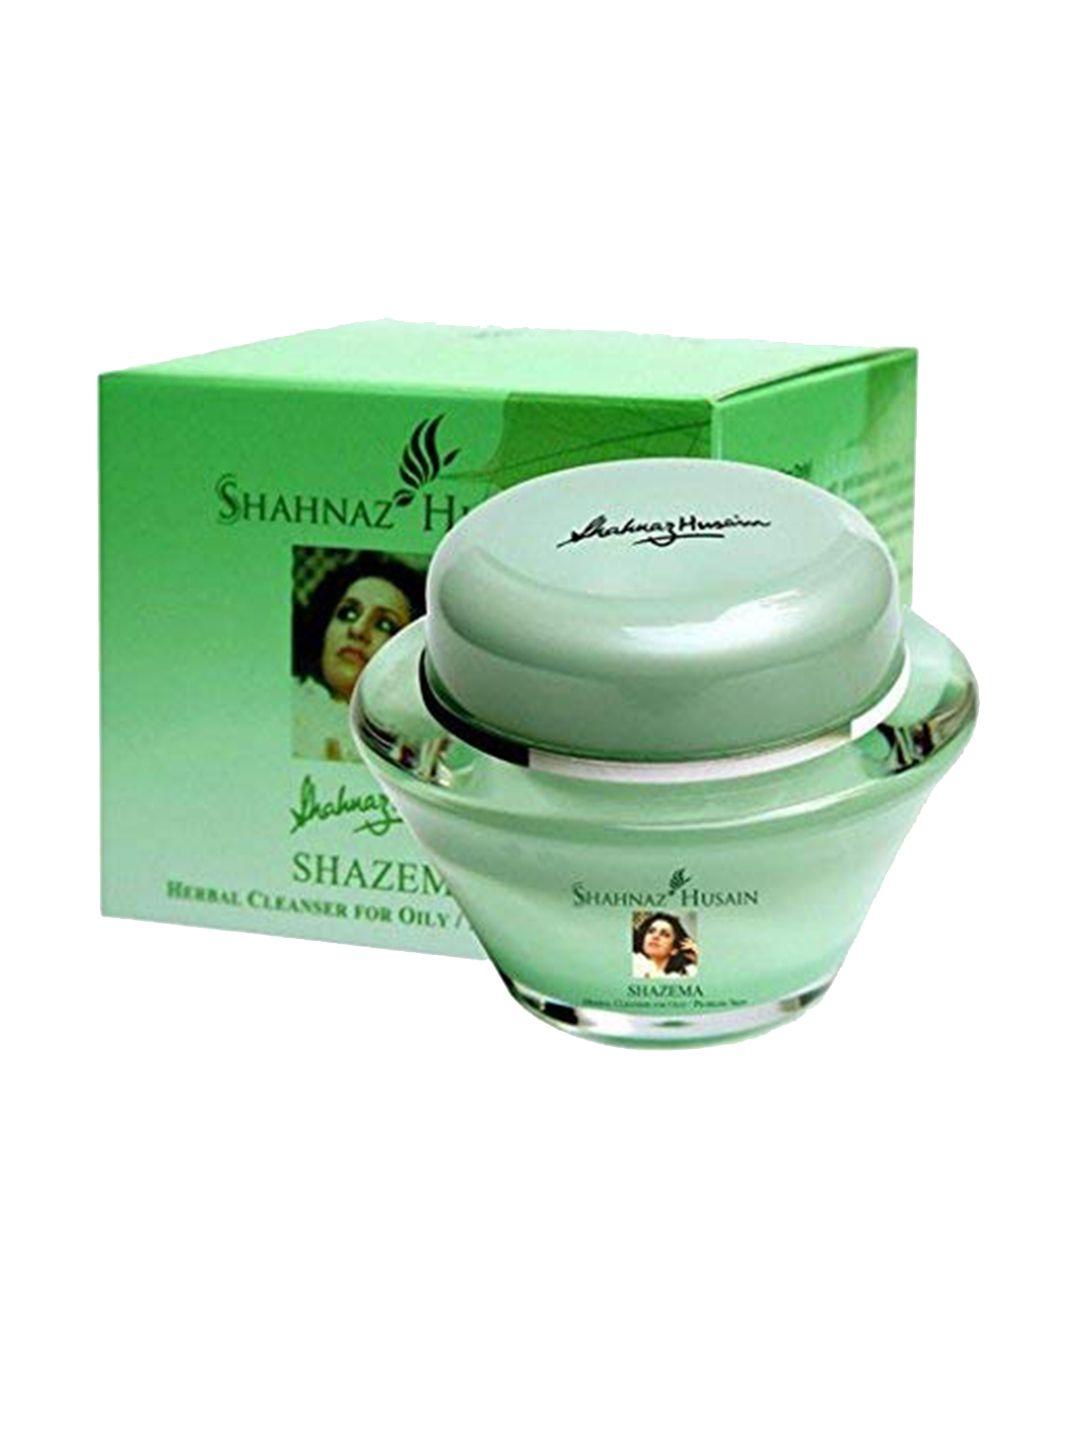 shahnaz husain white hazema plus herbal cleanser 40g